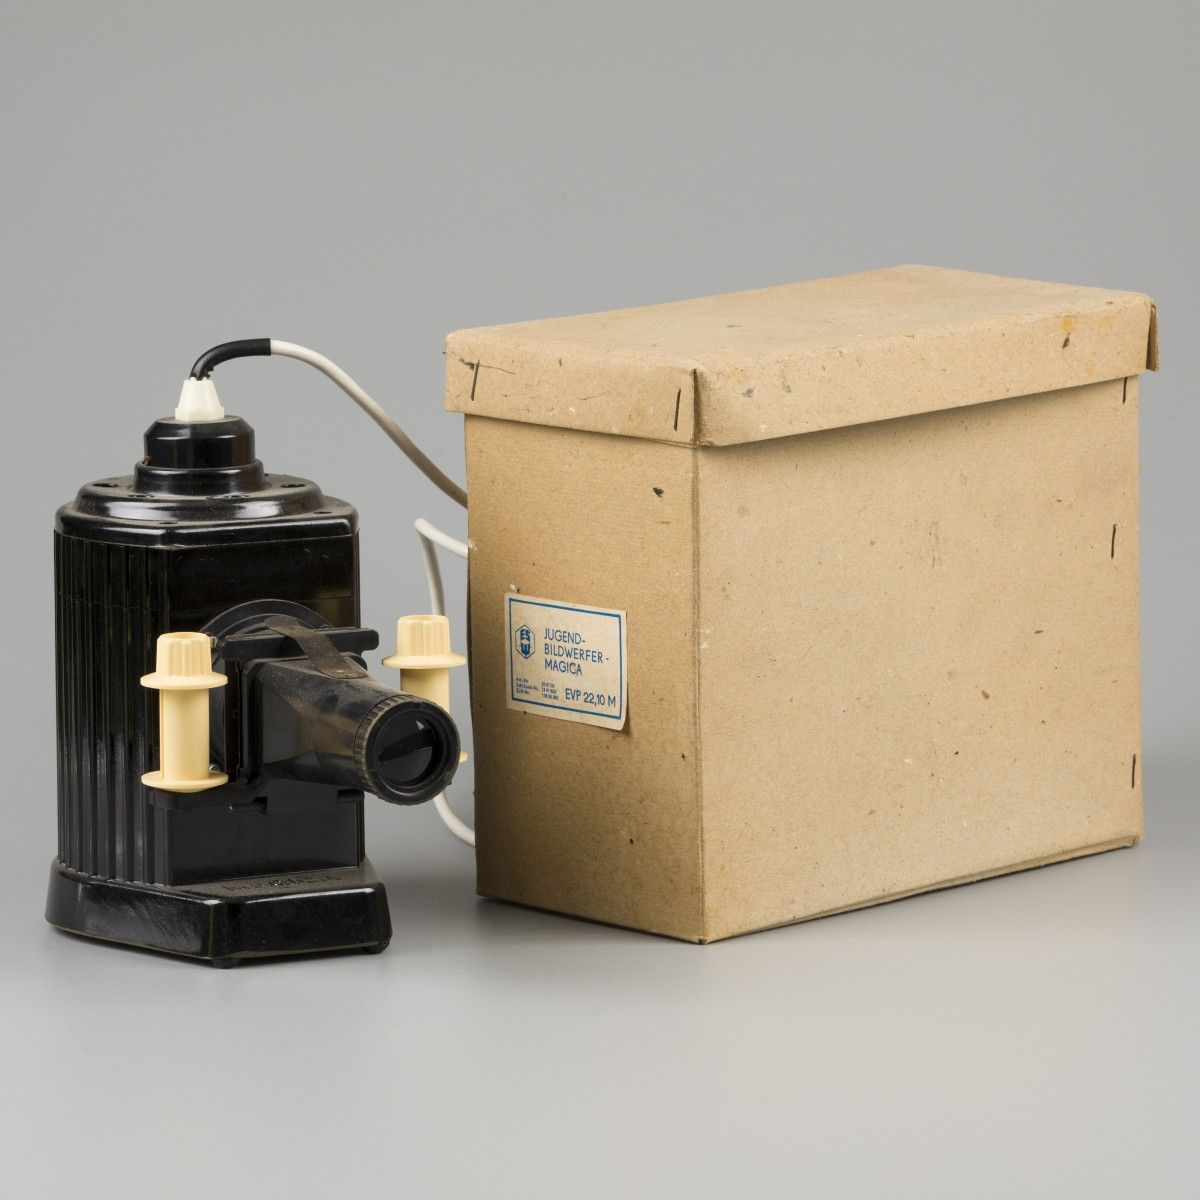 A bakelite magic lantern "Jugend Bildwerfer-Magica" EVP 22,10 mm. 在原来的盒子里。